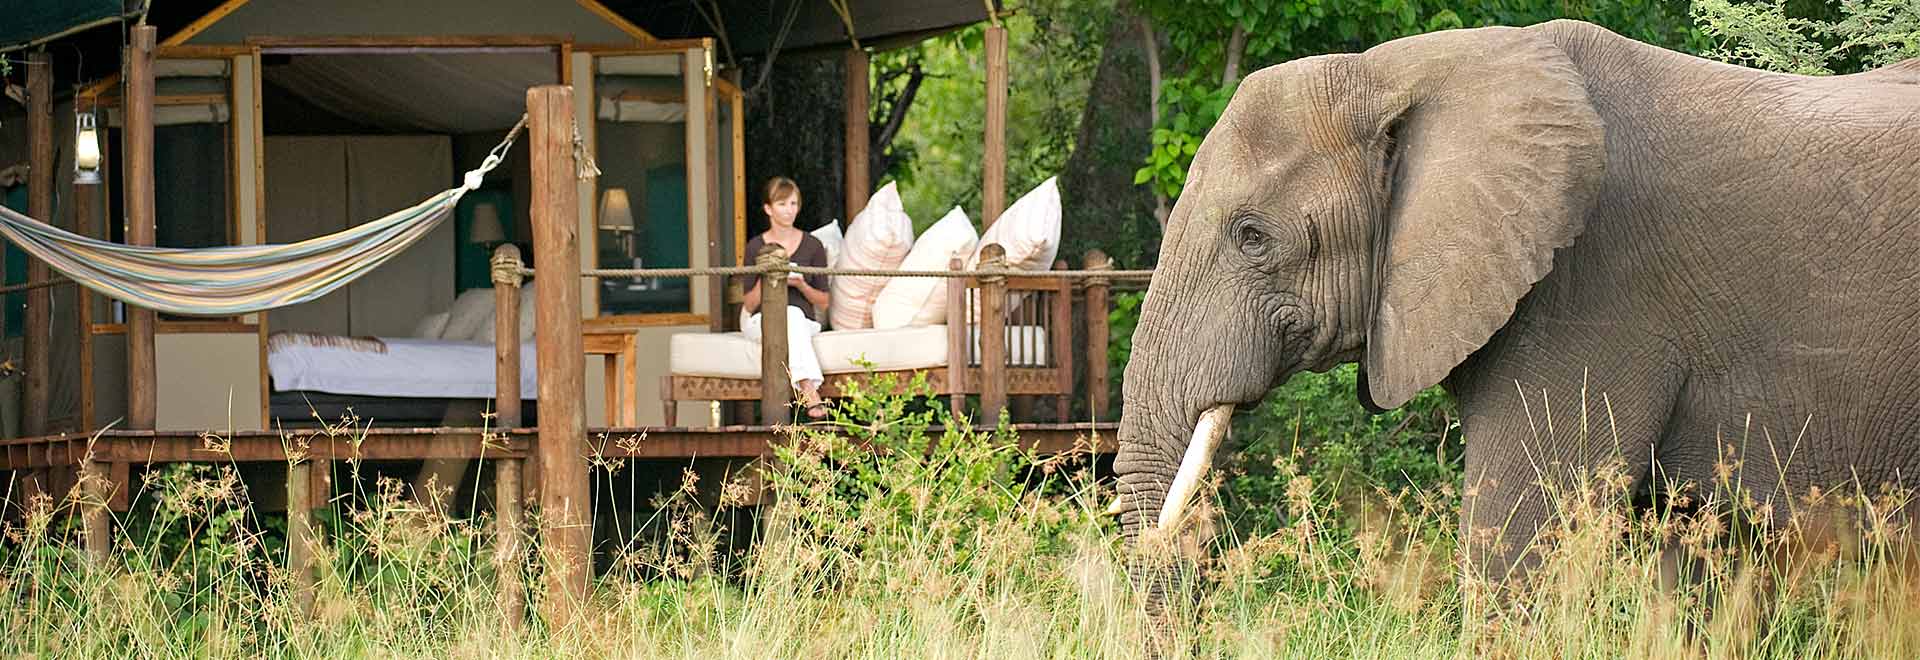 South Africa Hotel Elephant